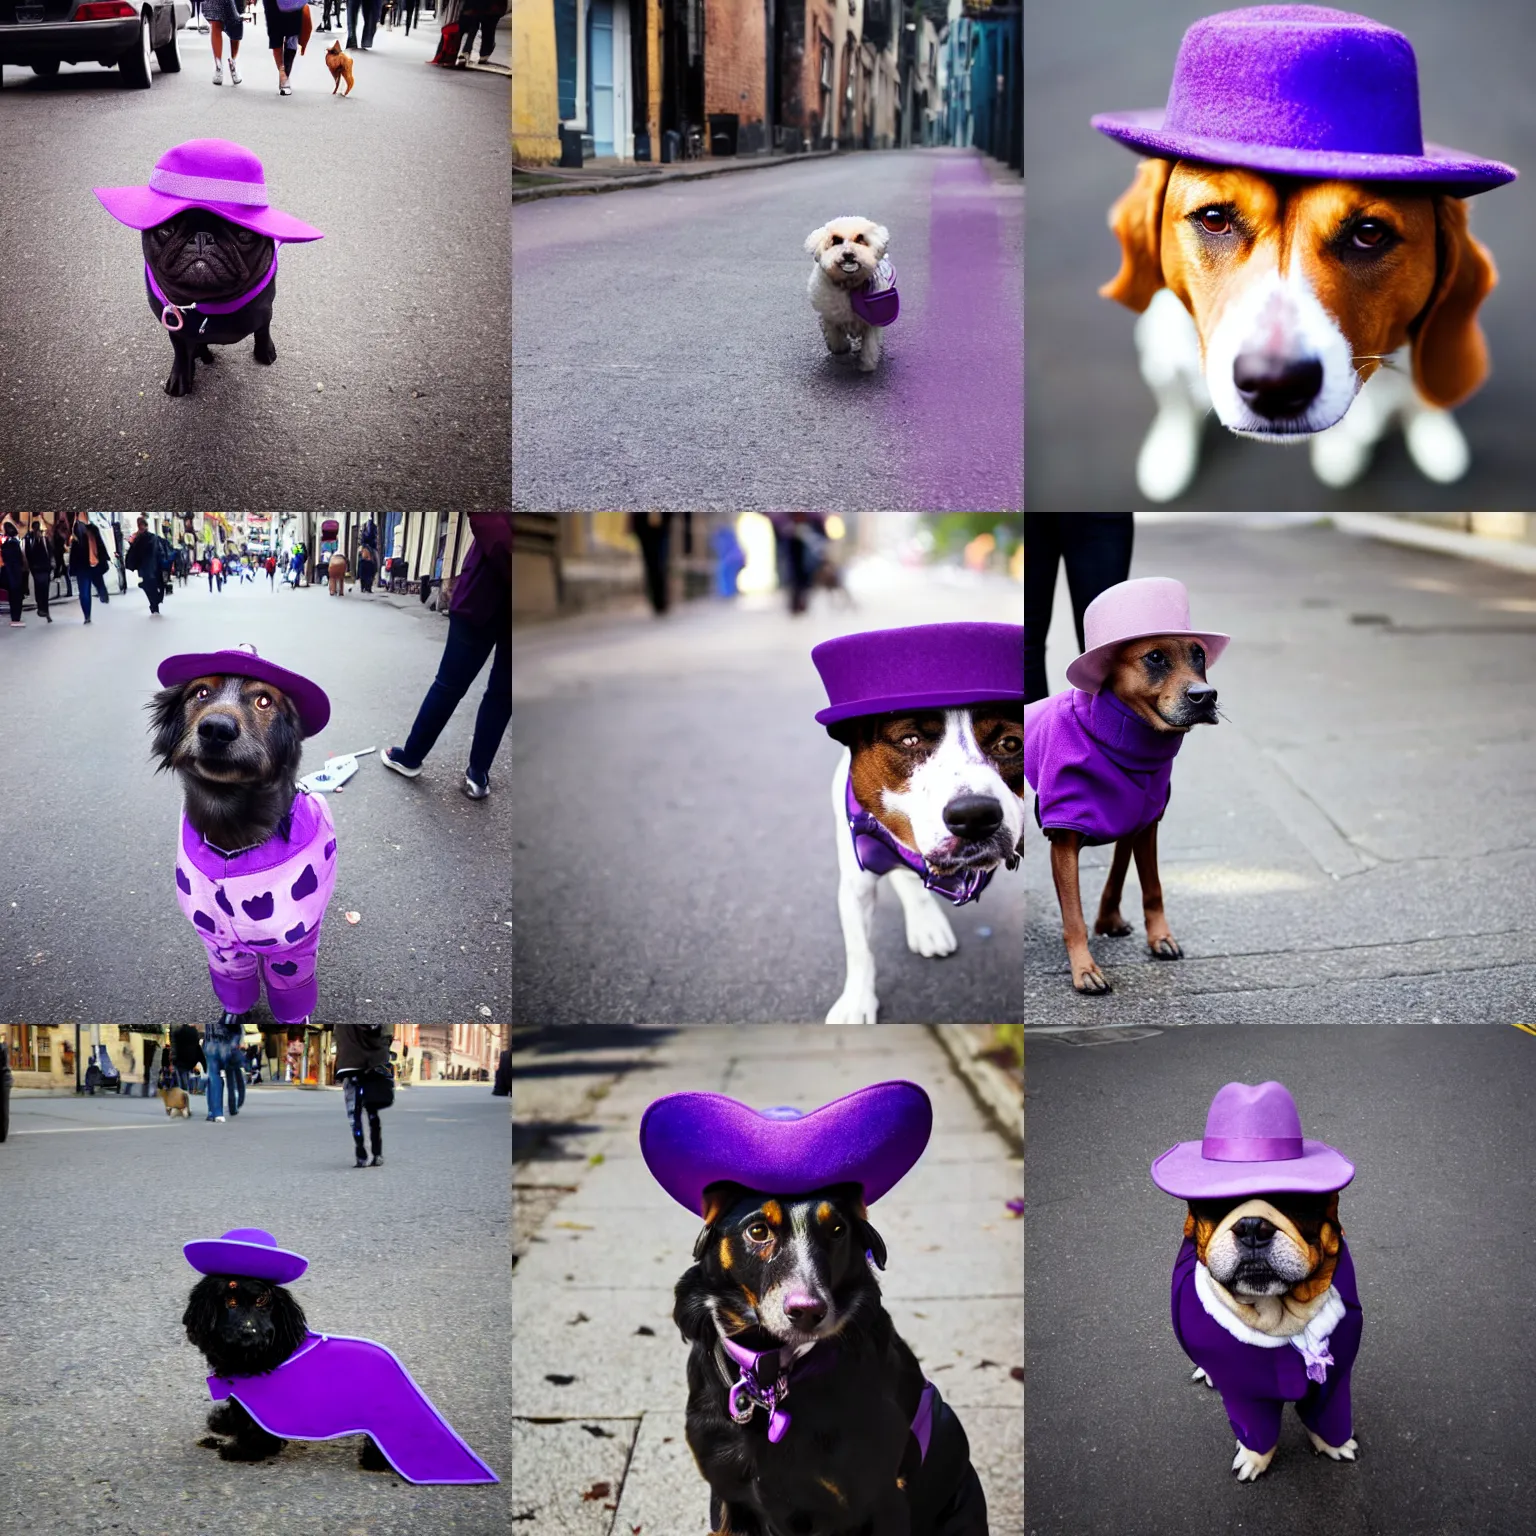 Prompt: a dog in a purple fedora in a street